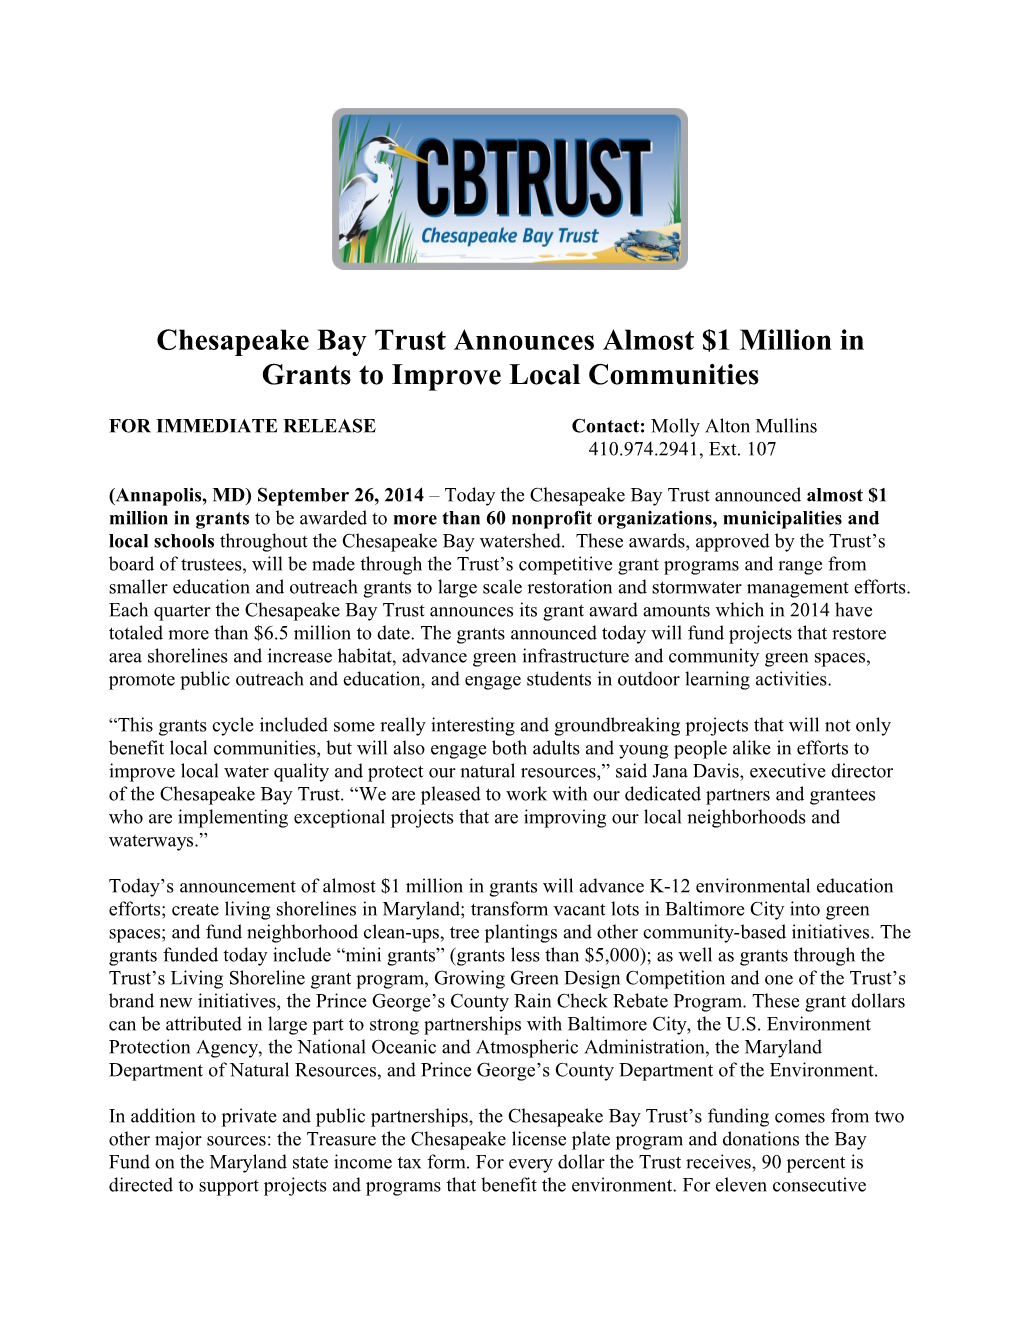 Chesapeake Bay Trust Announces Almost $1 Million in Grants to Improve Local Communities